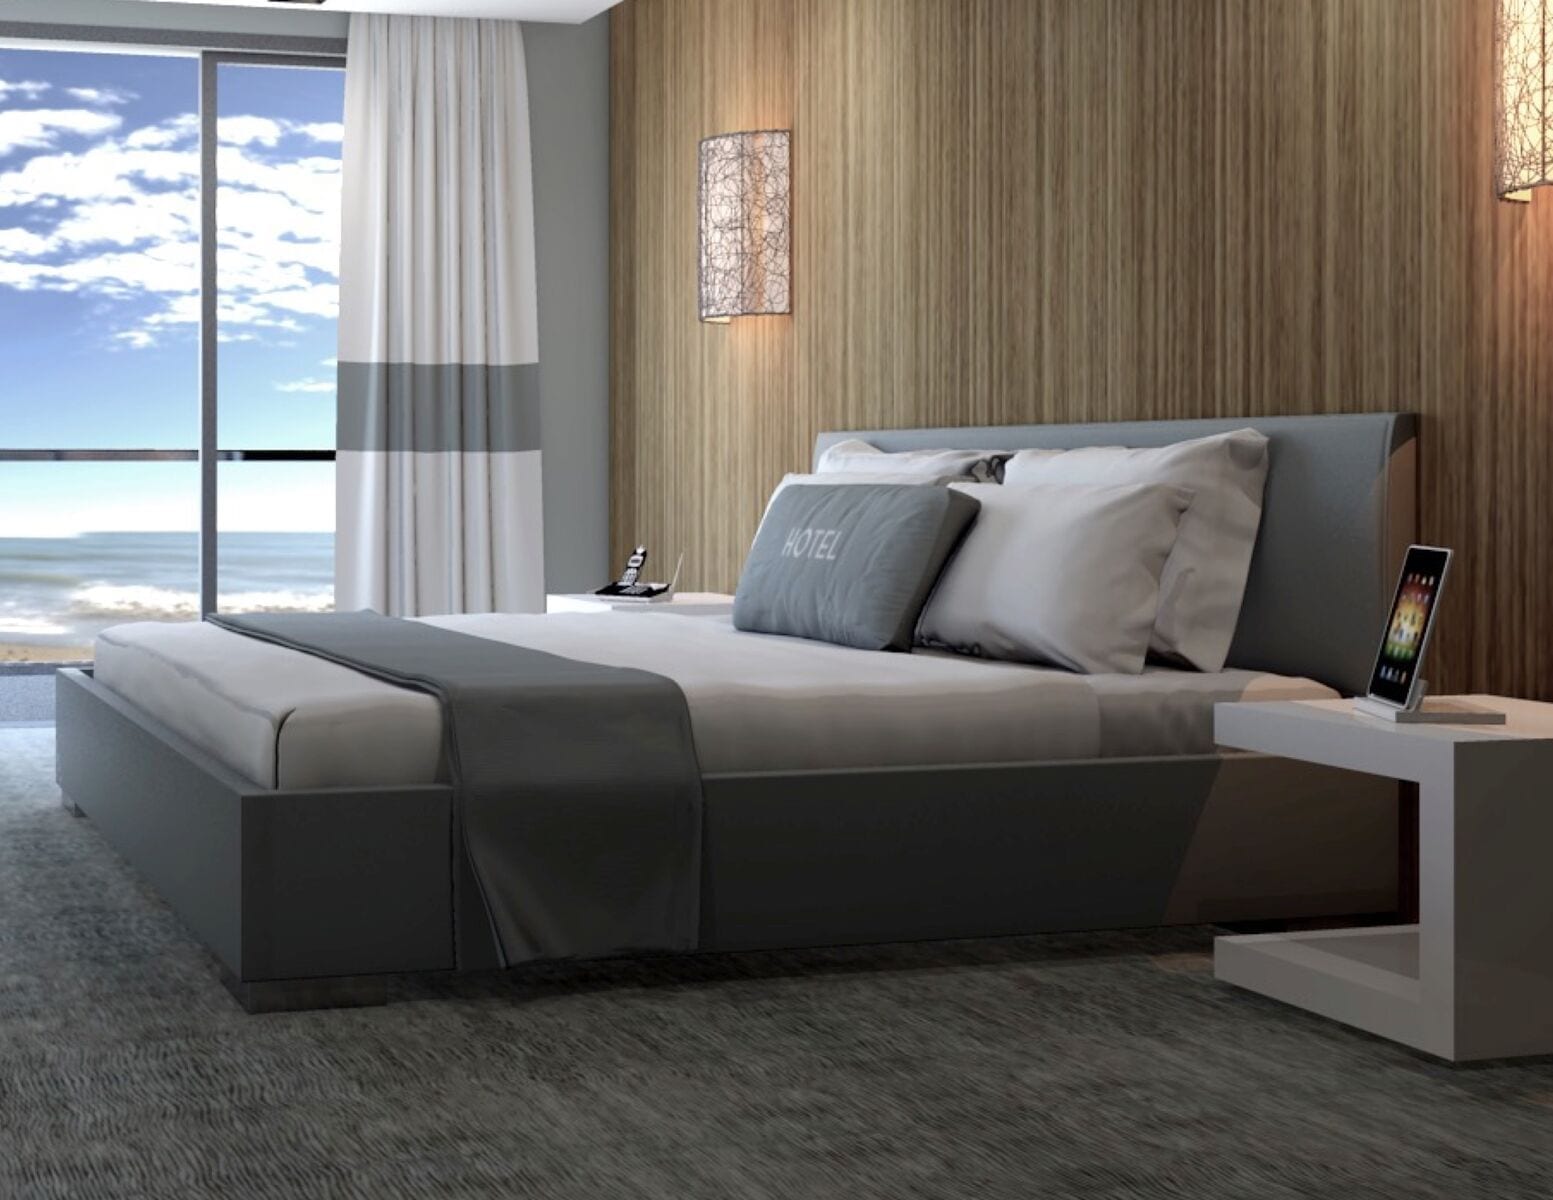 https://www.blendhomefurnishings.com/wp-content/uploads/2020/06/studio-custom-upholstered-headboards-bed-wall-mounted-freestanding-blend-home-furnishings-interior-designer-main.jpg